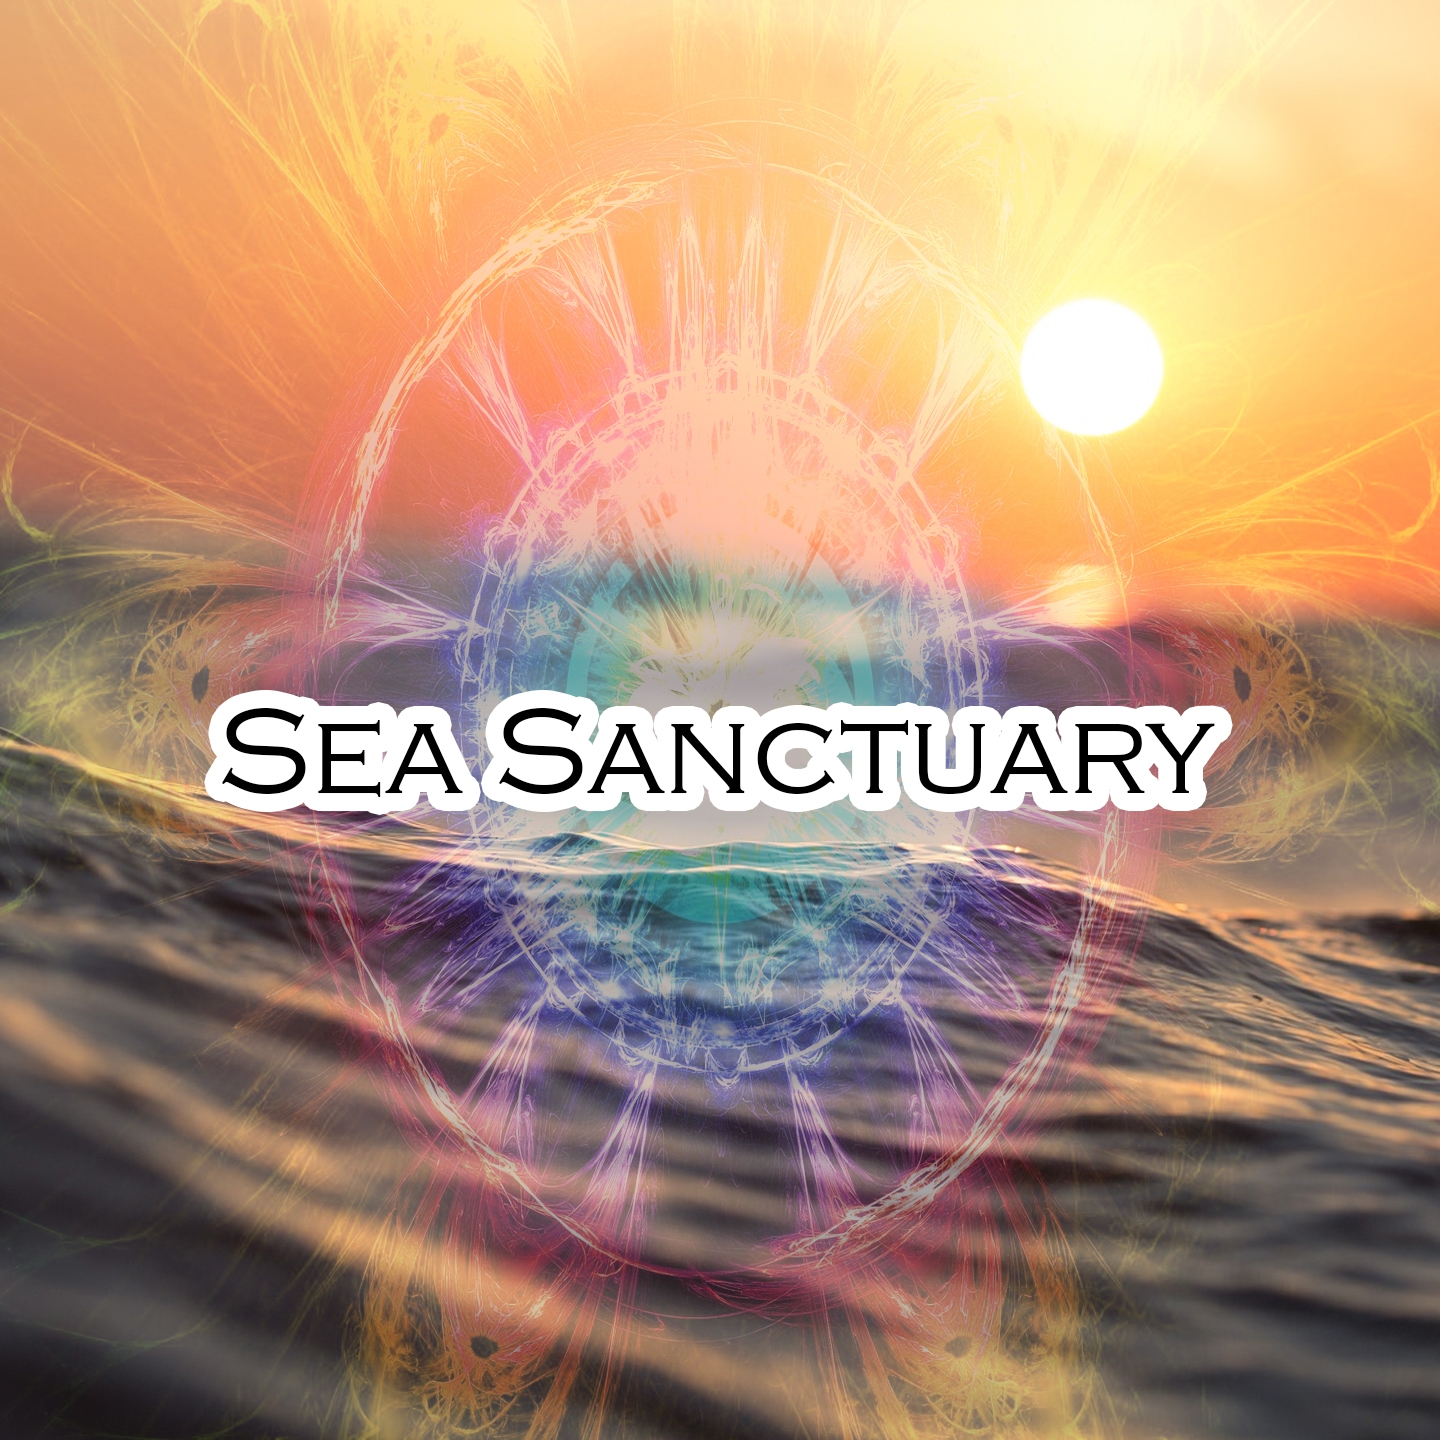 Sea Sanctuary